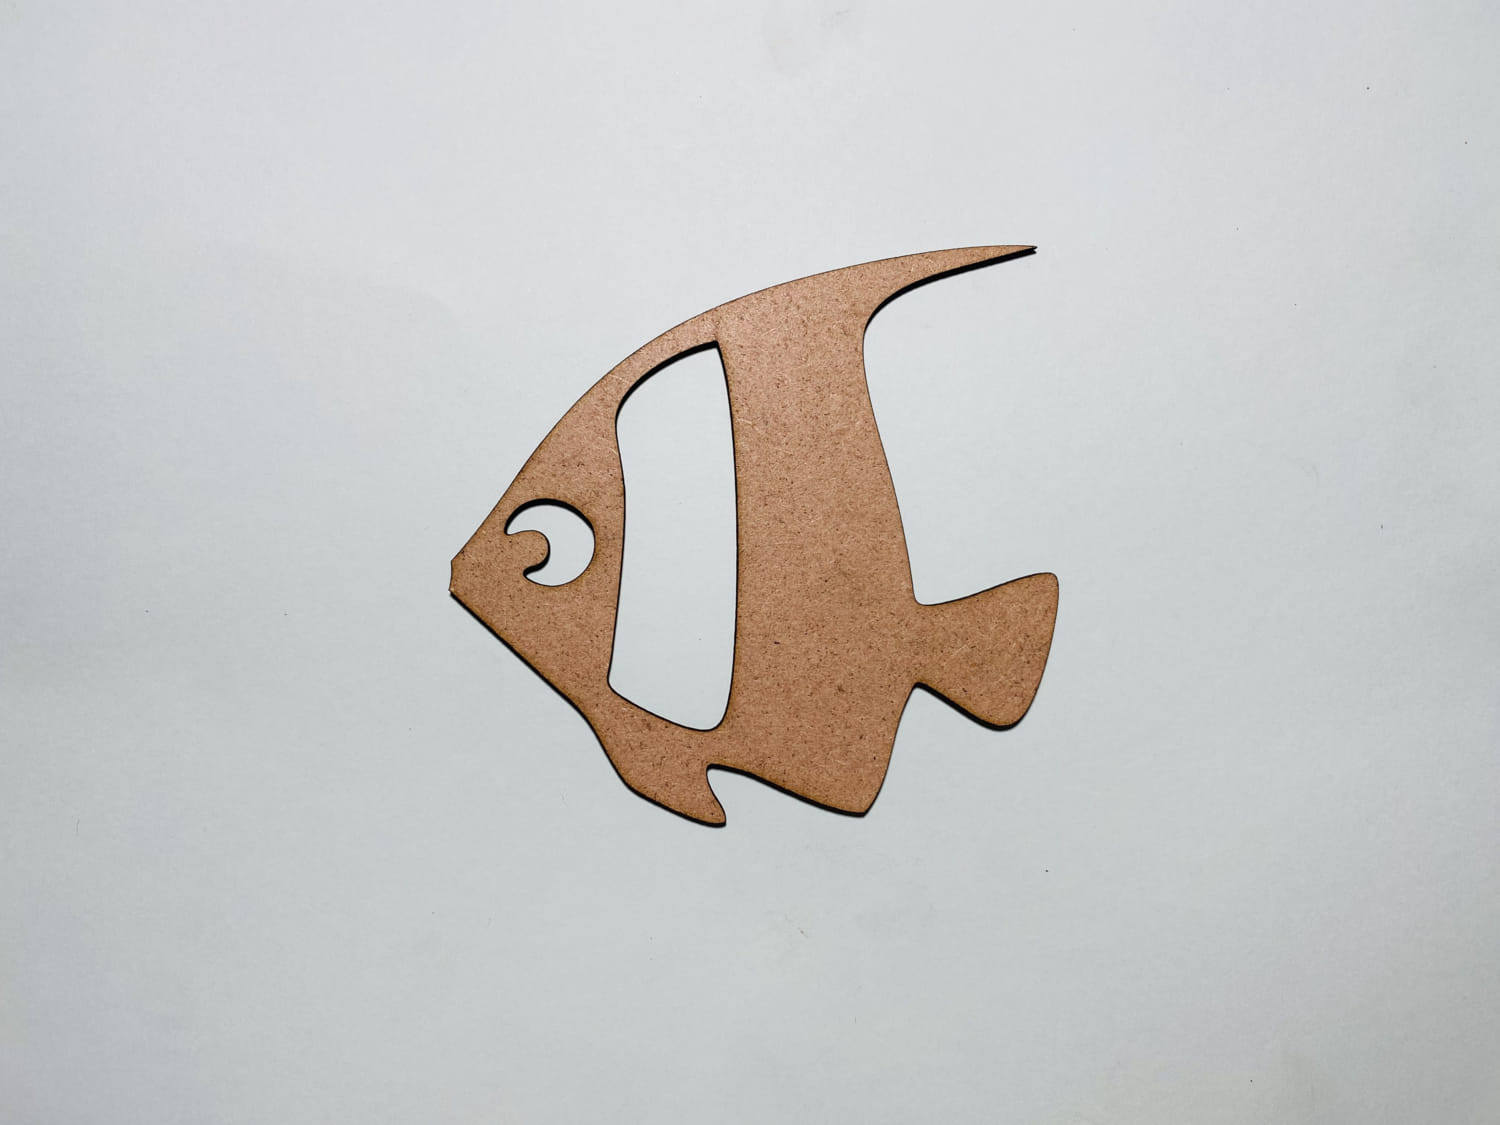 Laser Cut Wooden Fish Craft Shape Free Vector